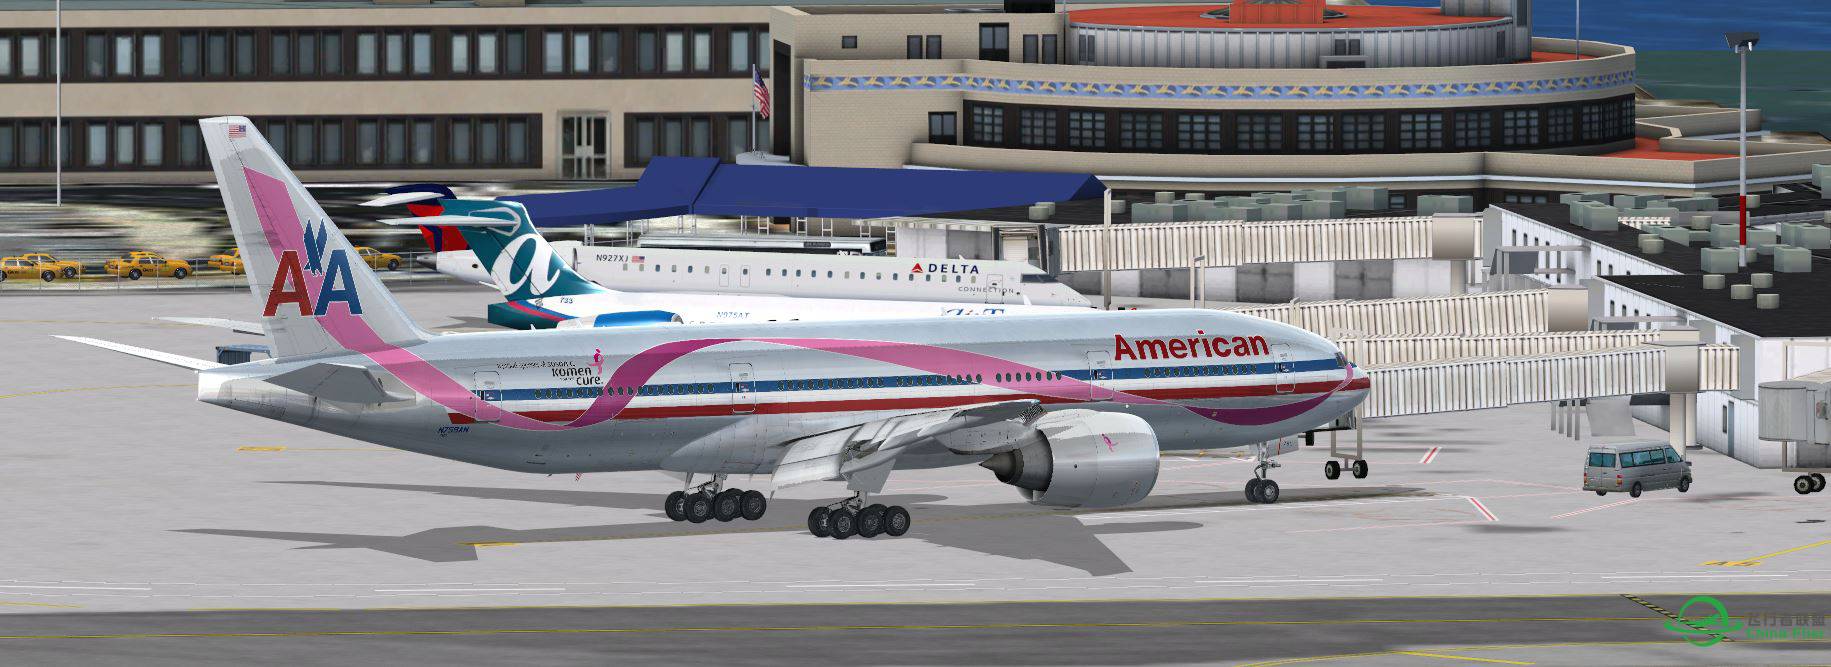 B777 American Airline-5249 